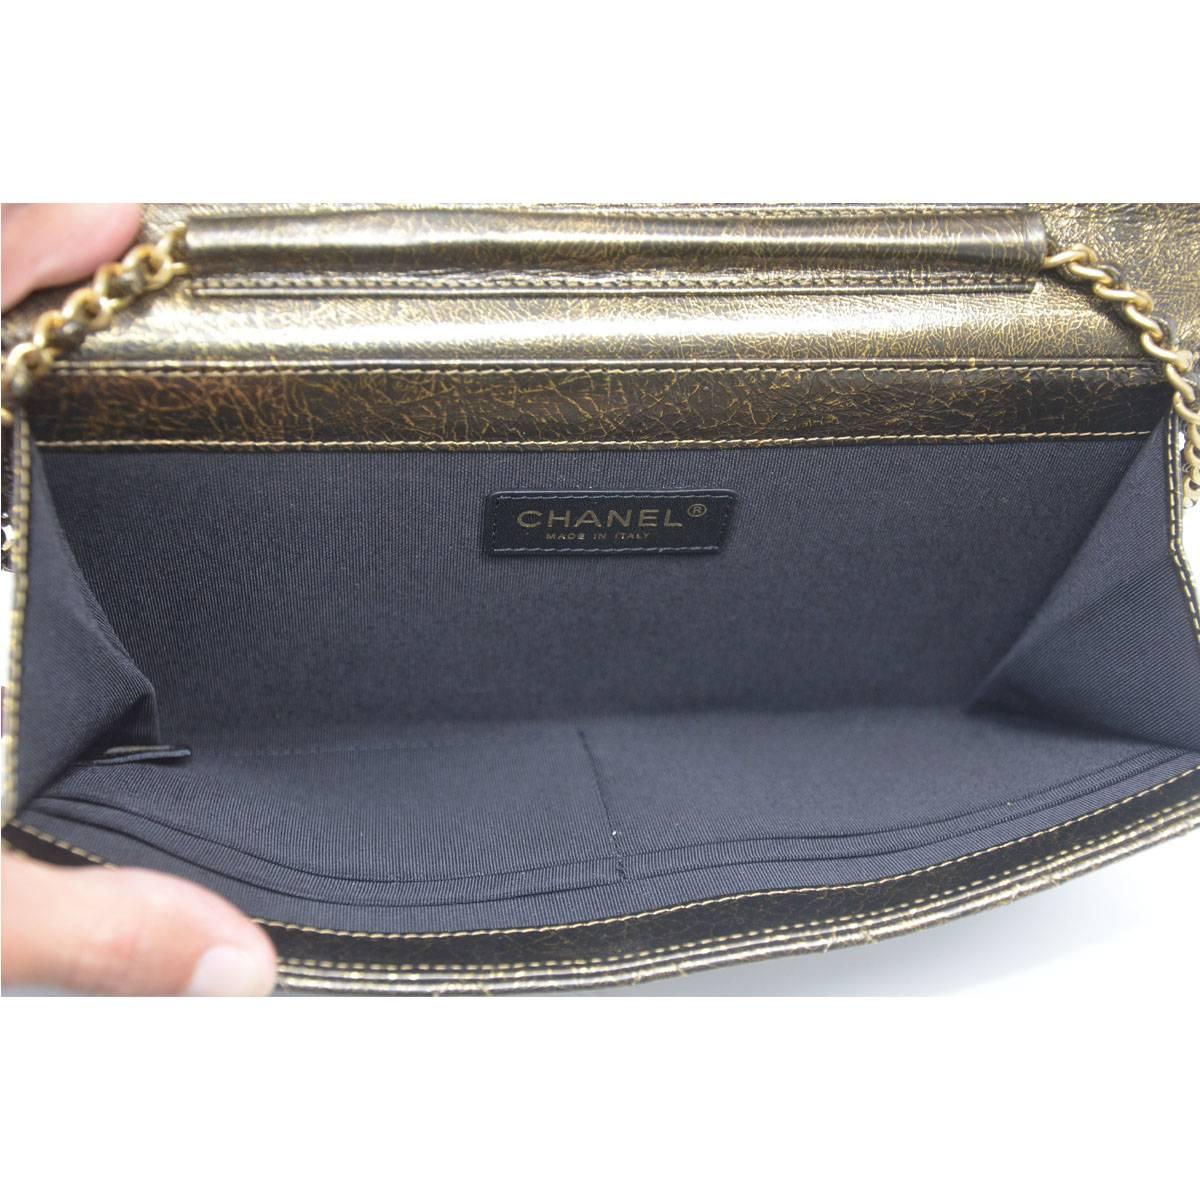 Chanel Single Flap Gold Leather Small Handbag 3